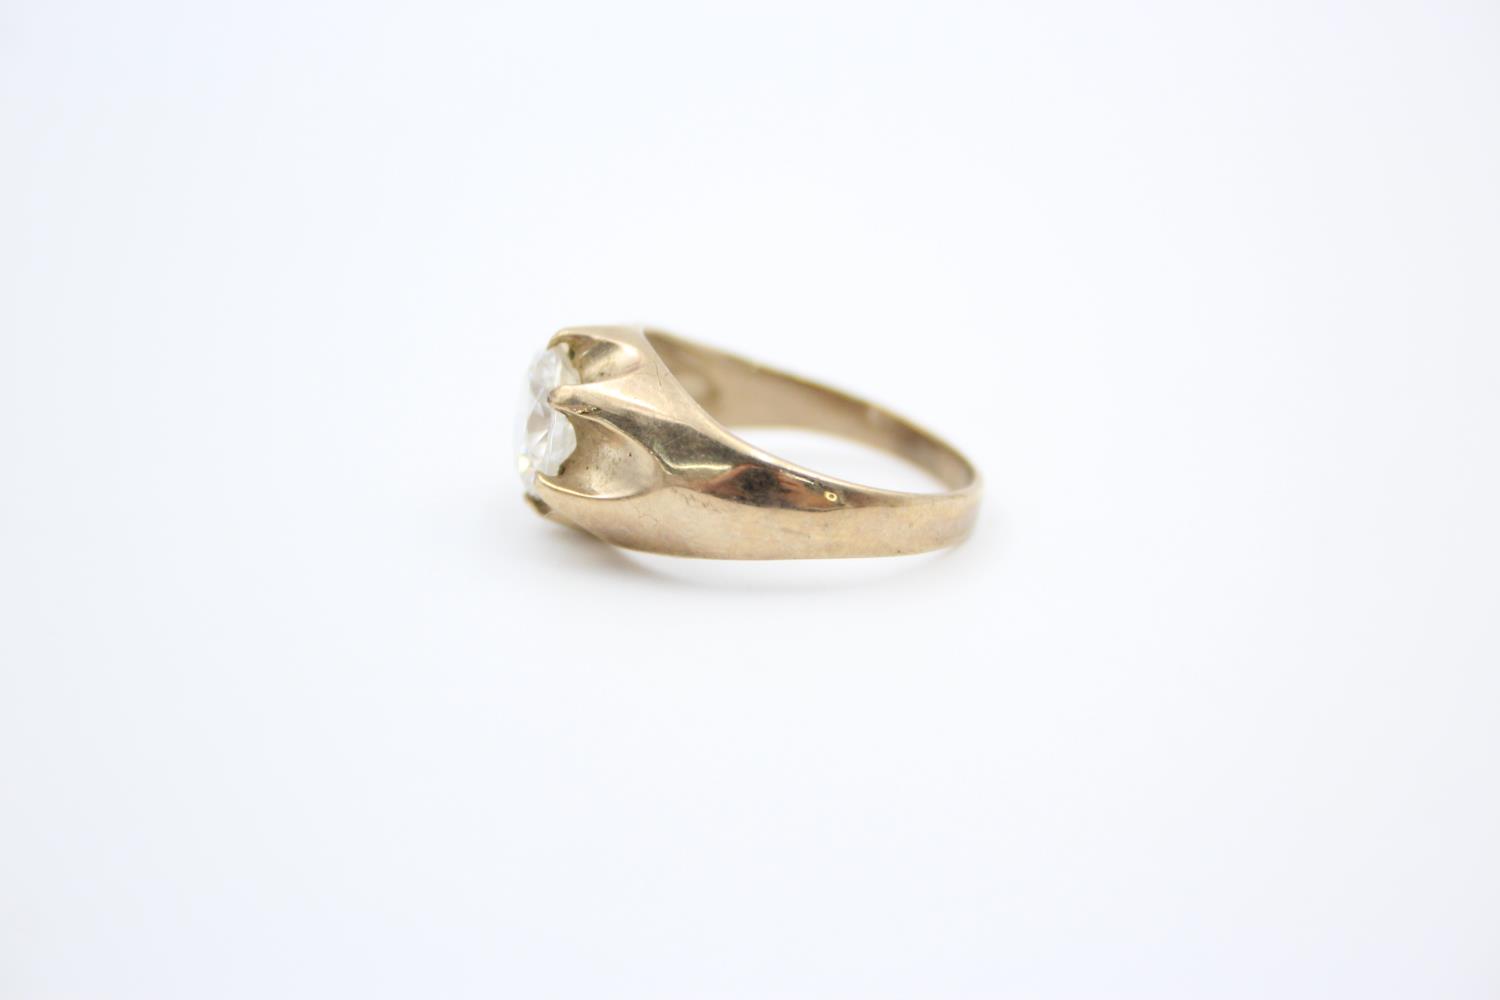 9ct Gold gemstone ring 4.2 grams gross - Image 2 of 5